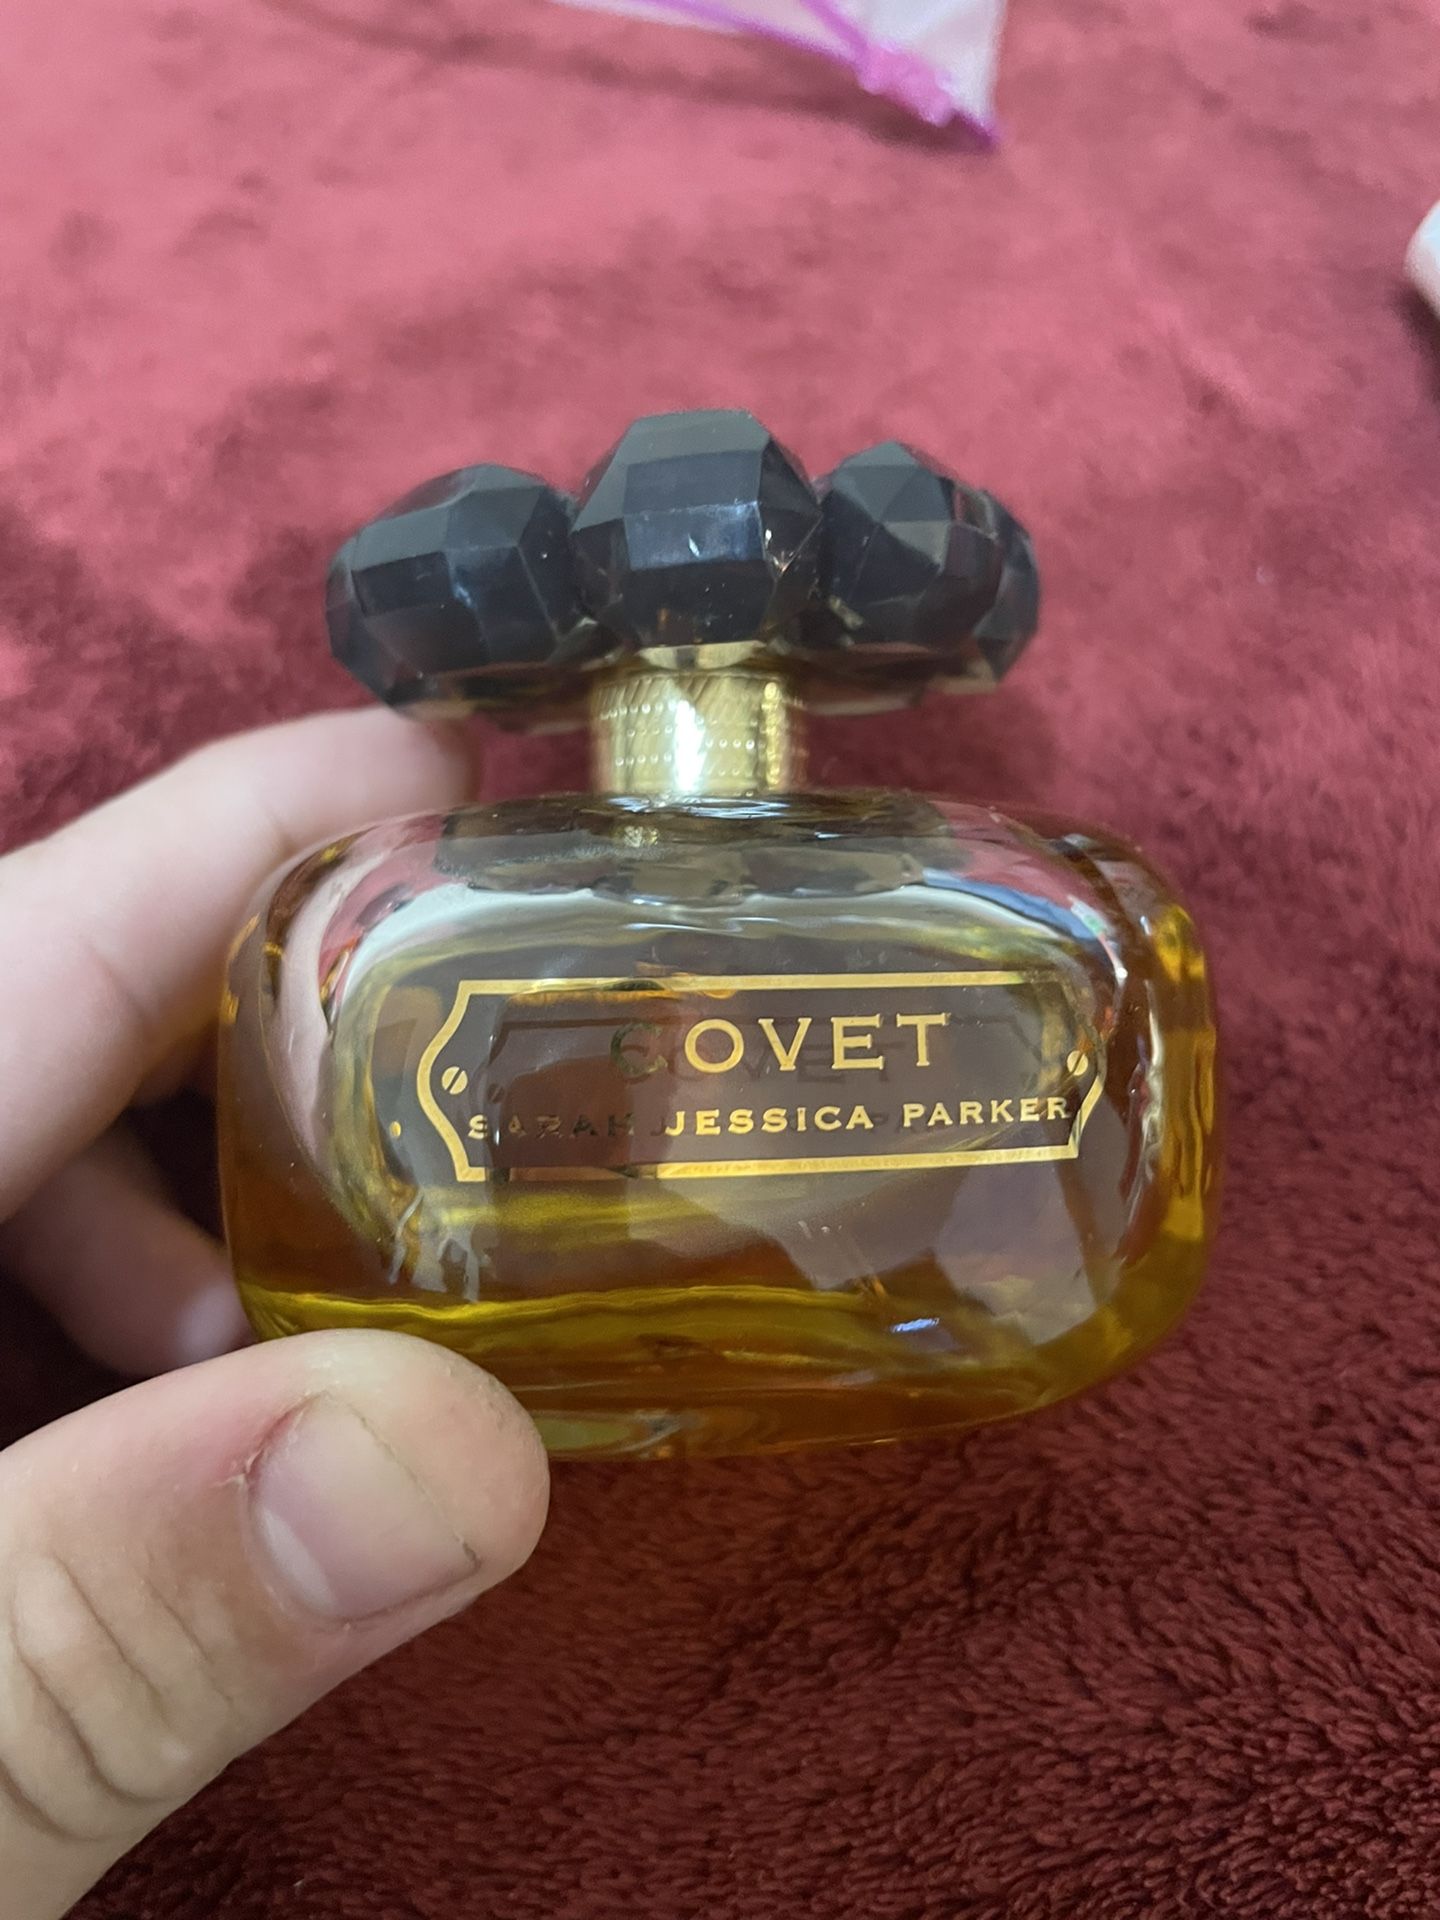 Sovet Perfume 